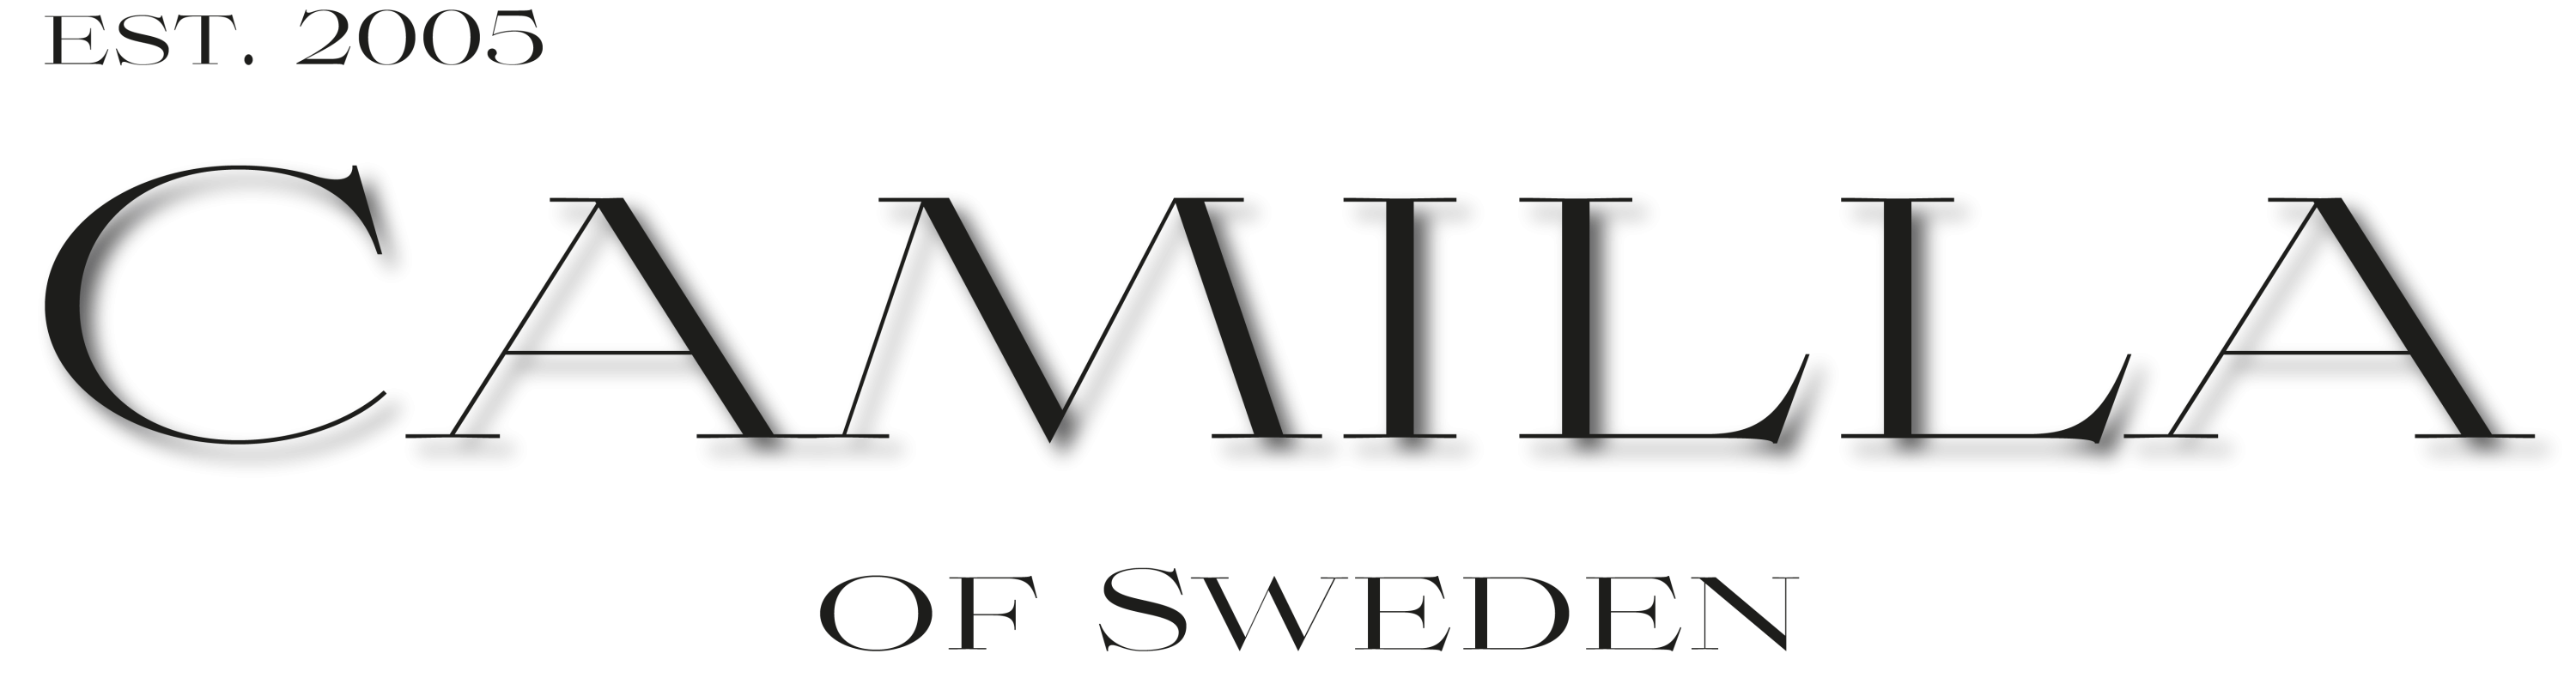 Camilla Of Sweden Logo shadowed Black Full